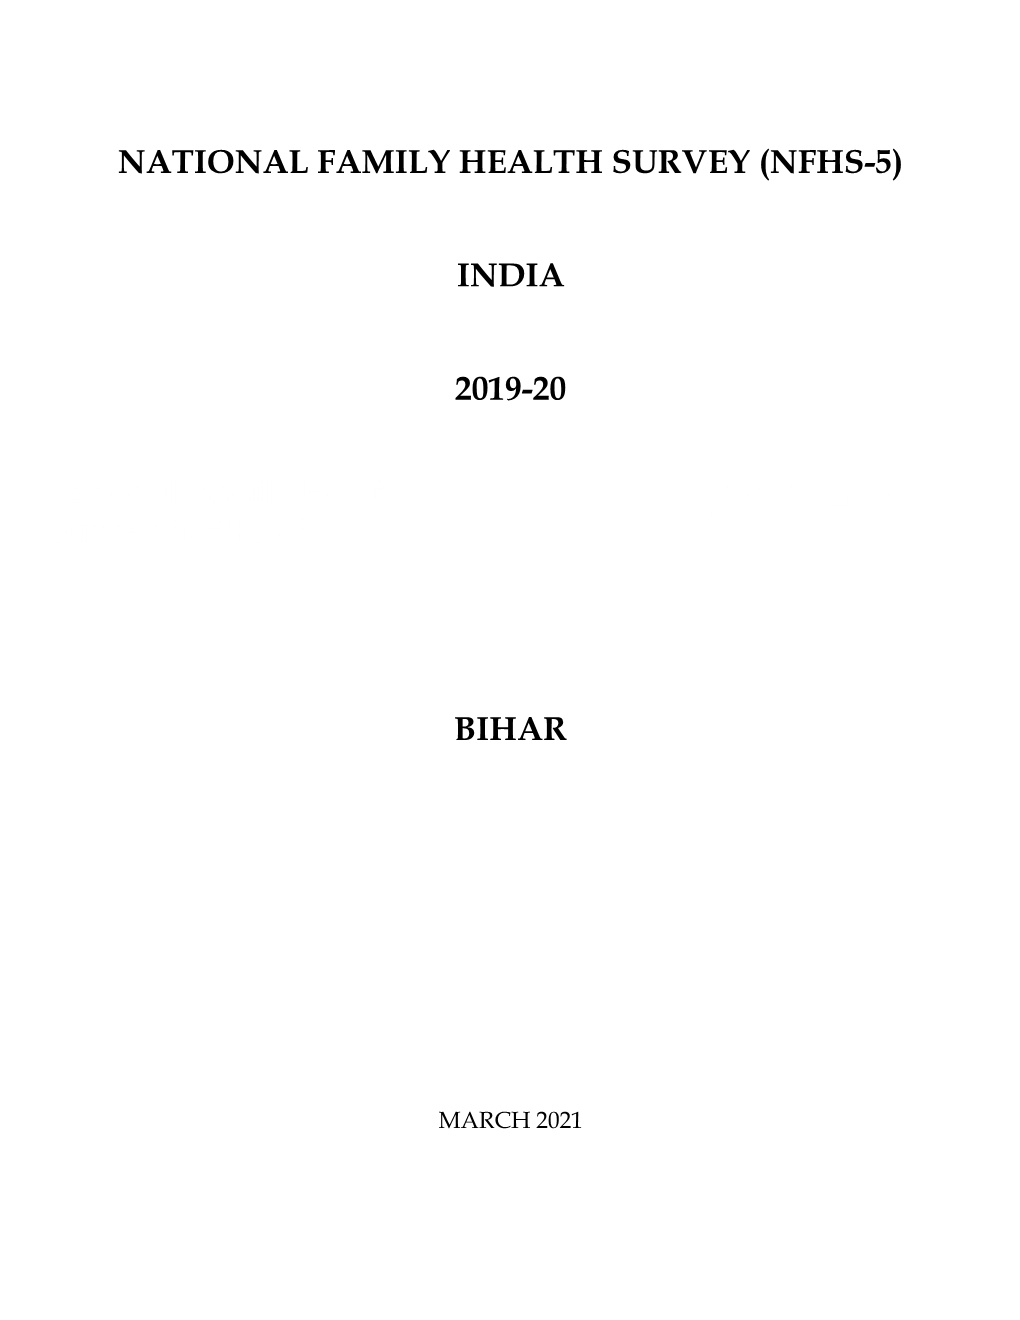 National Family Health Survey (Nfhs-5) India 2019-20 Bihar